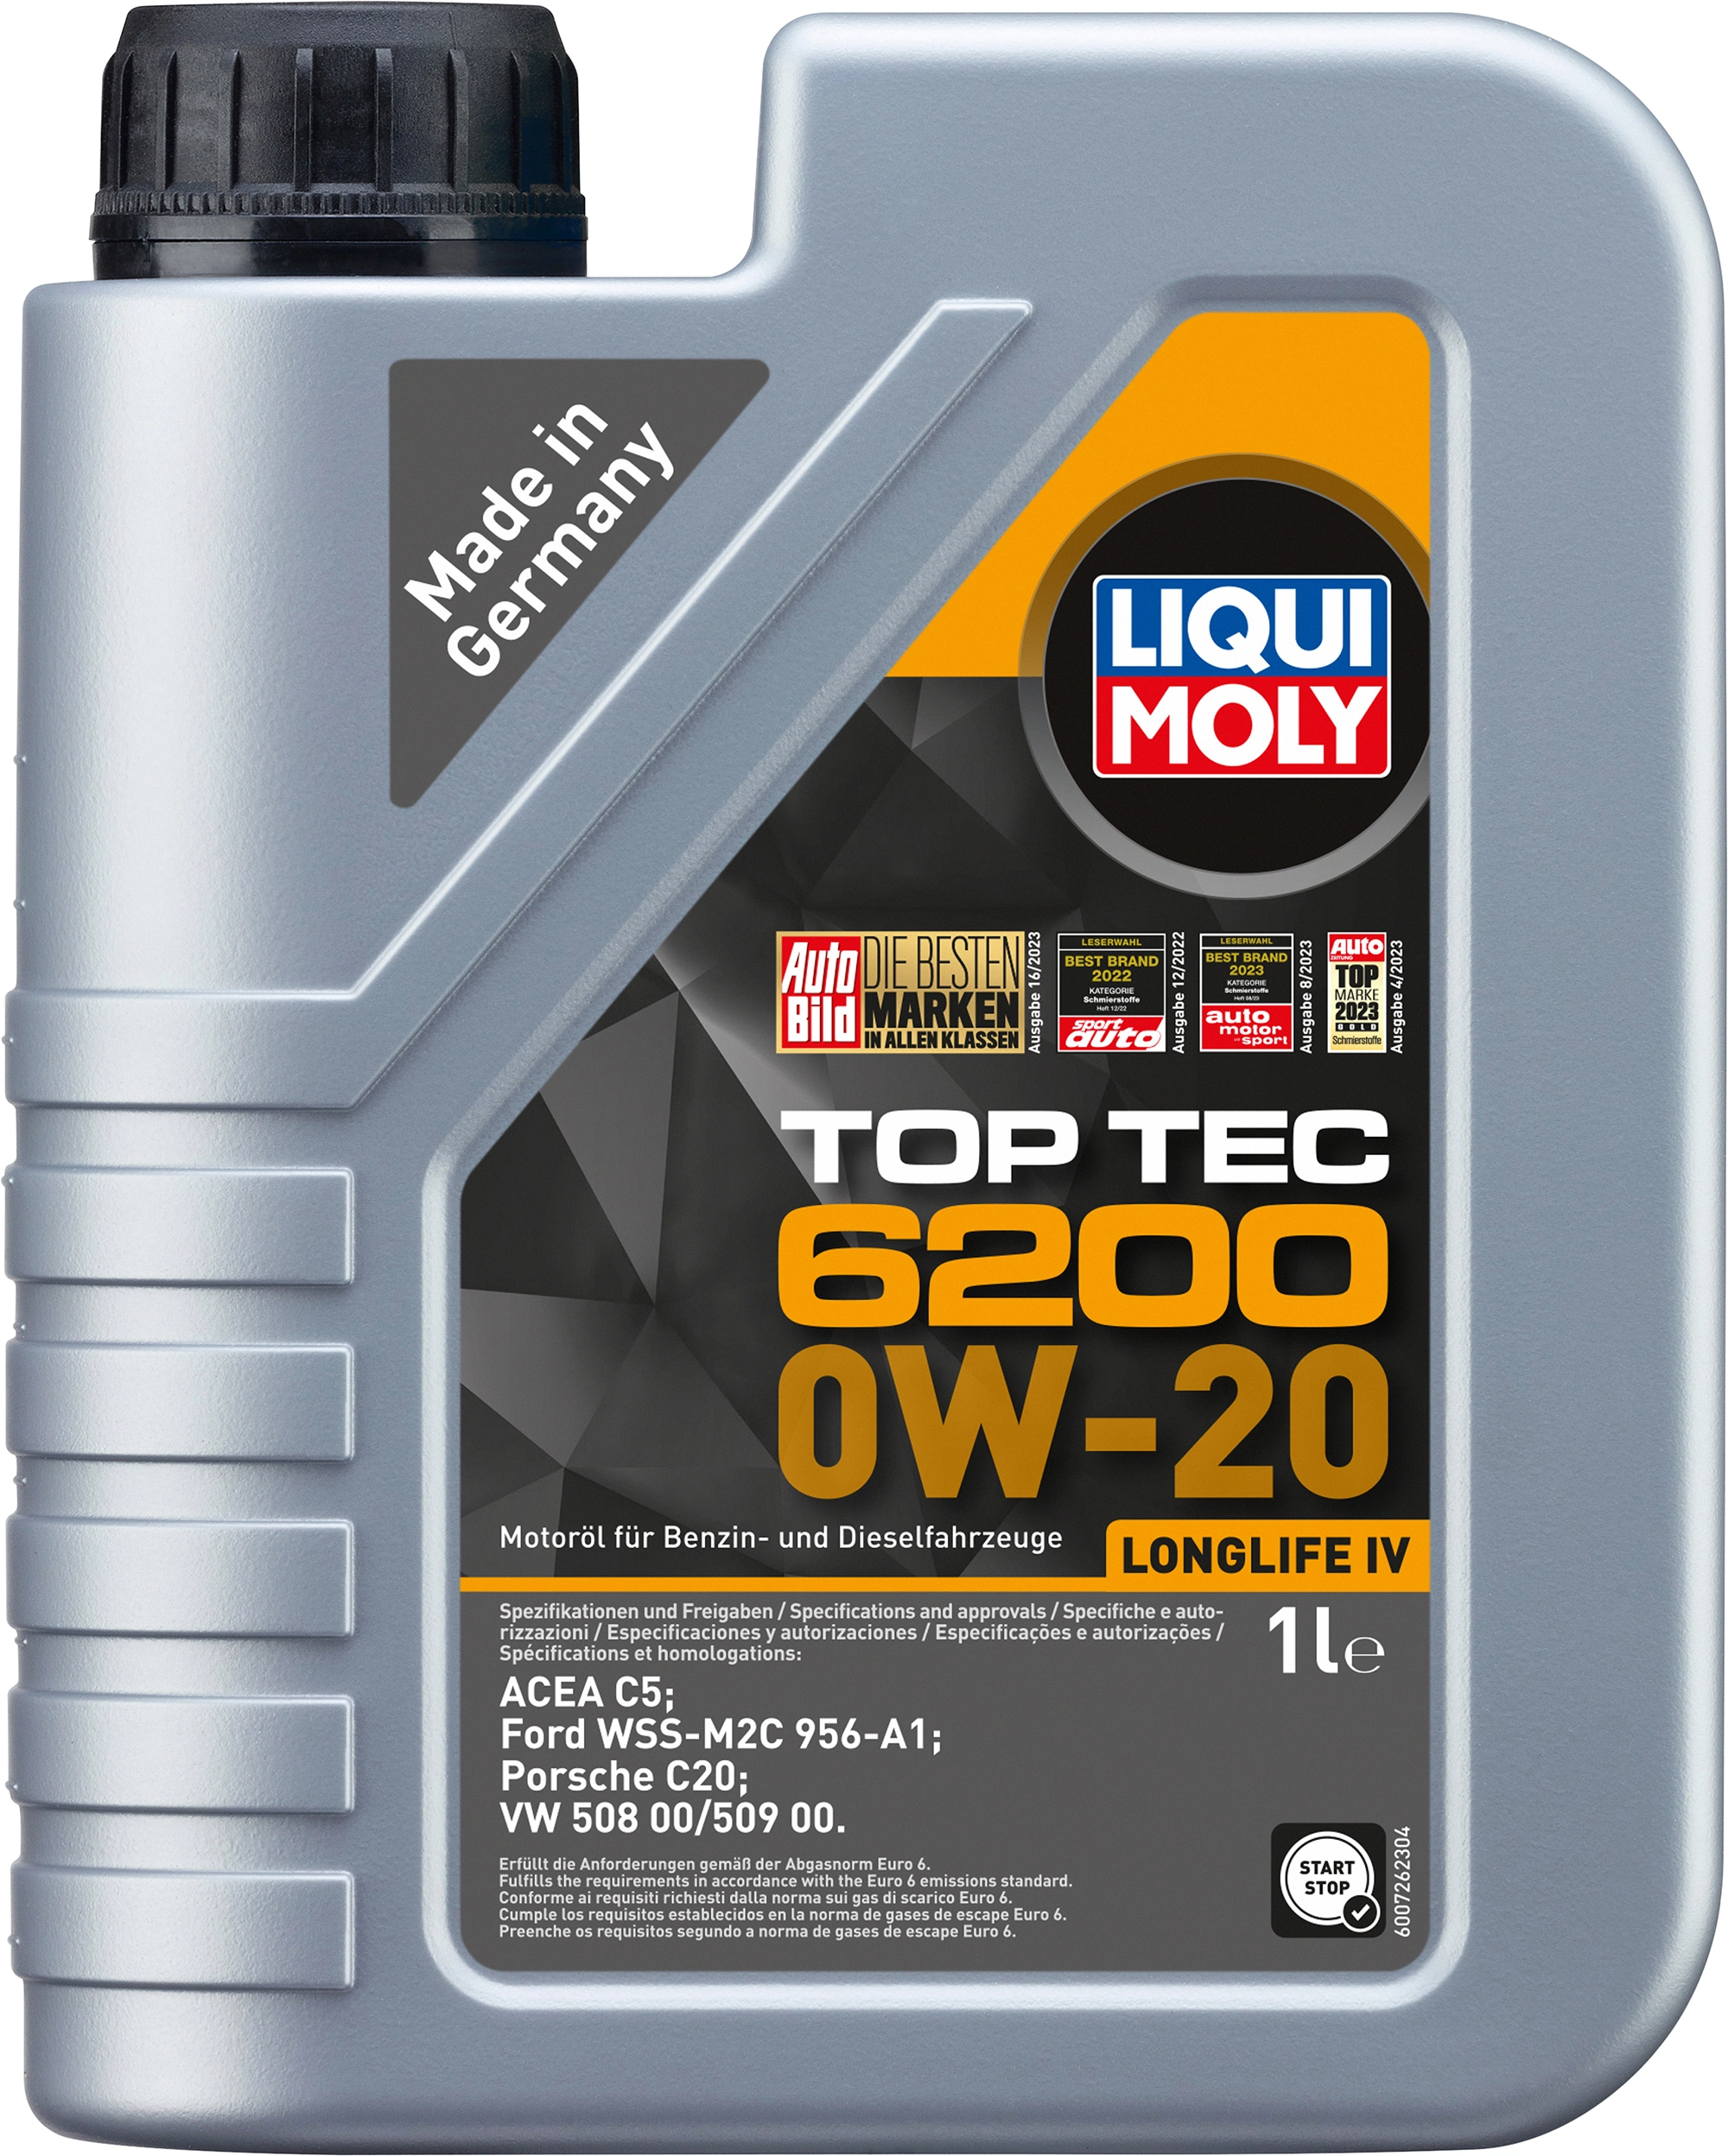 Liqui Moly Top Tec 6200 0W-20 Motoröl kaufen bei OBI